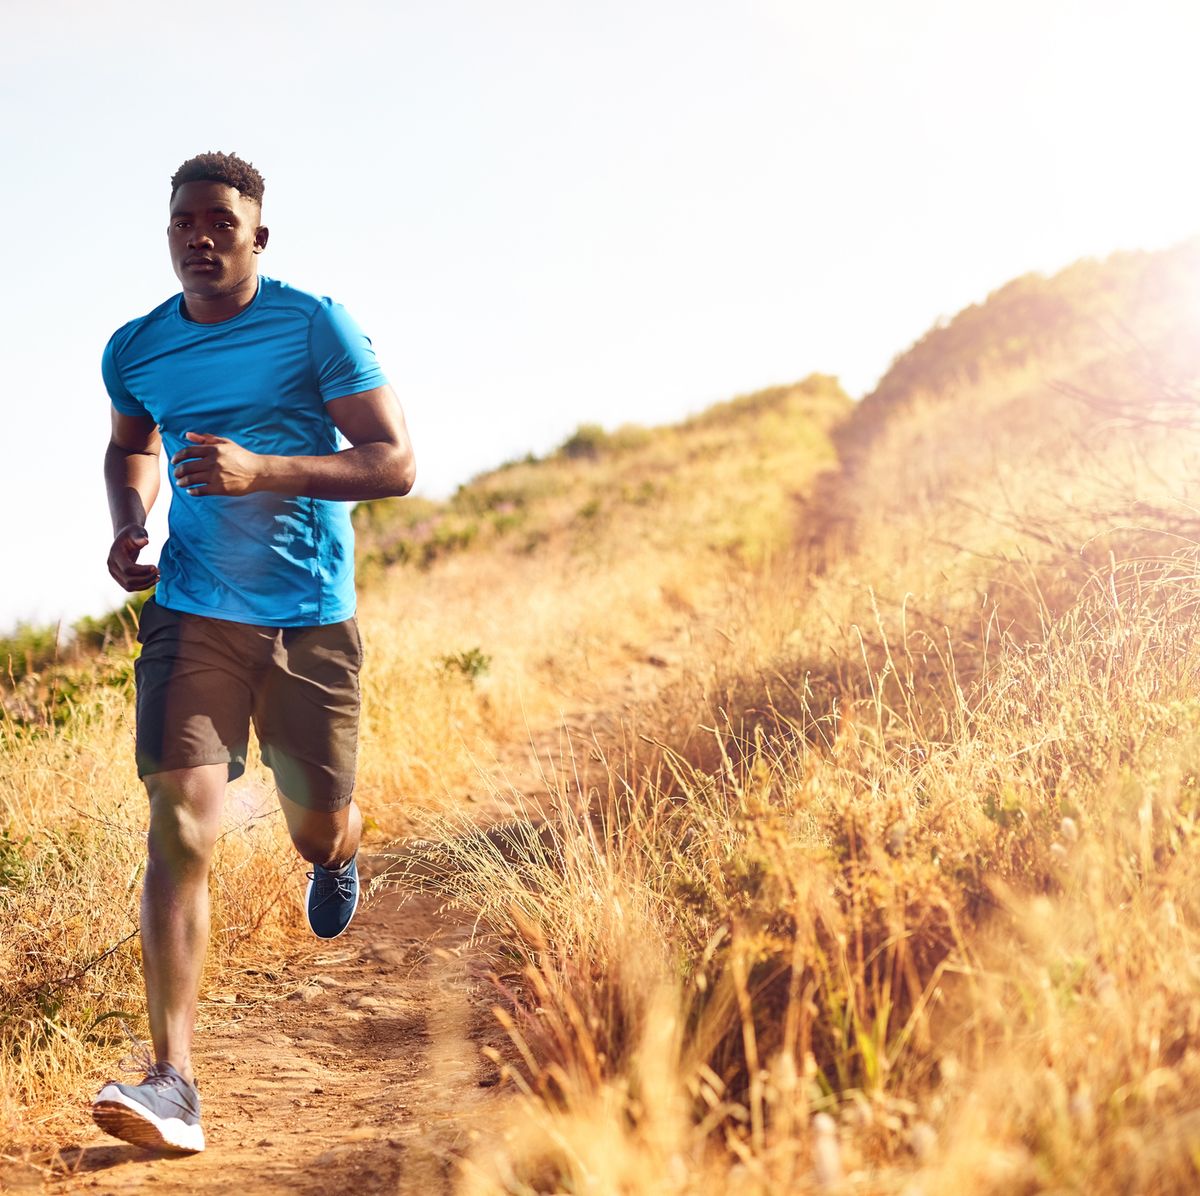 How to Breathe While Running - Expert Tips for Better Breathing